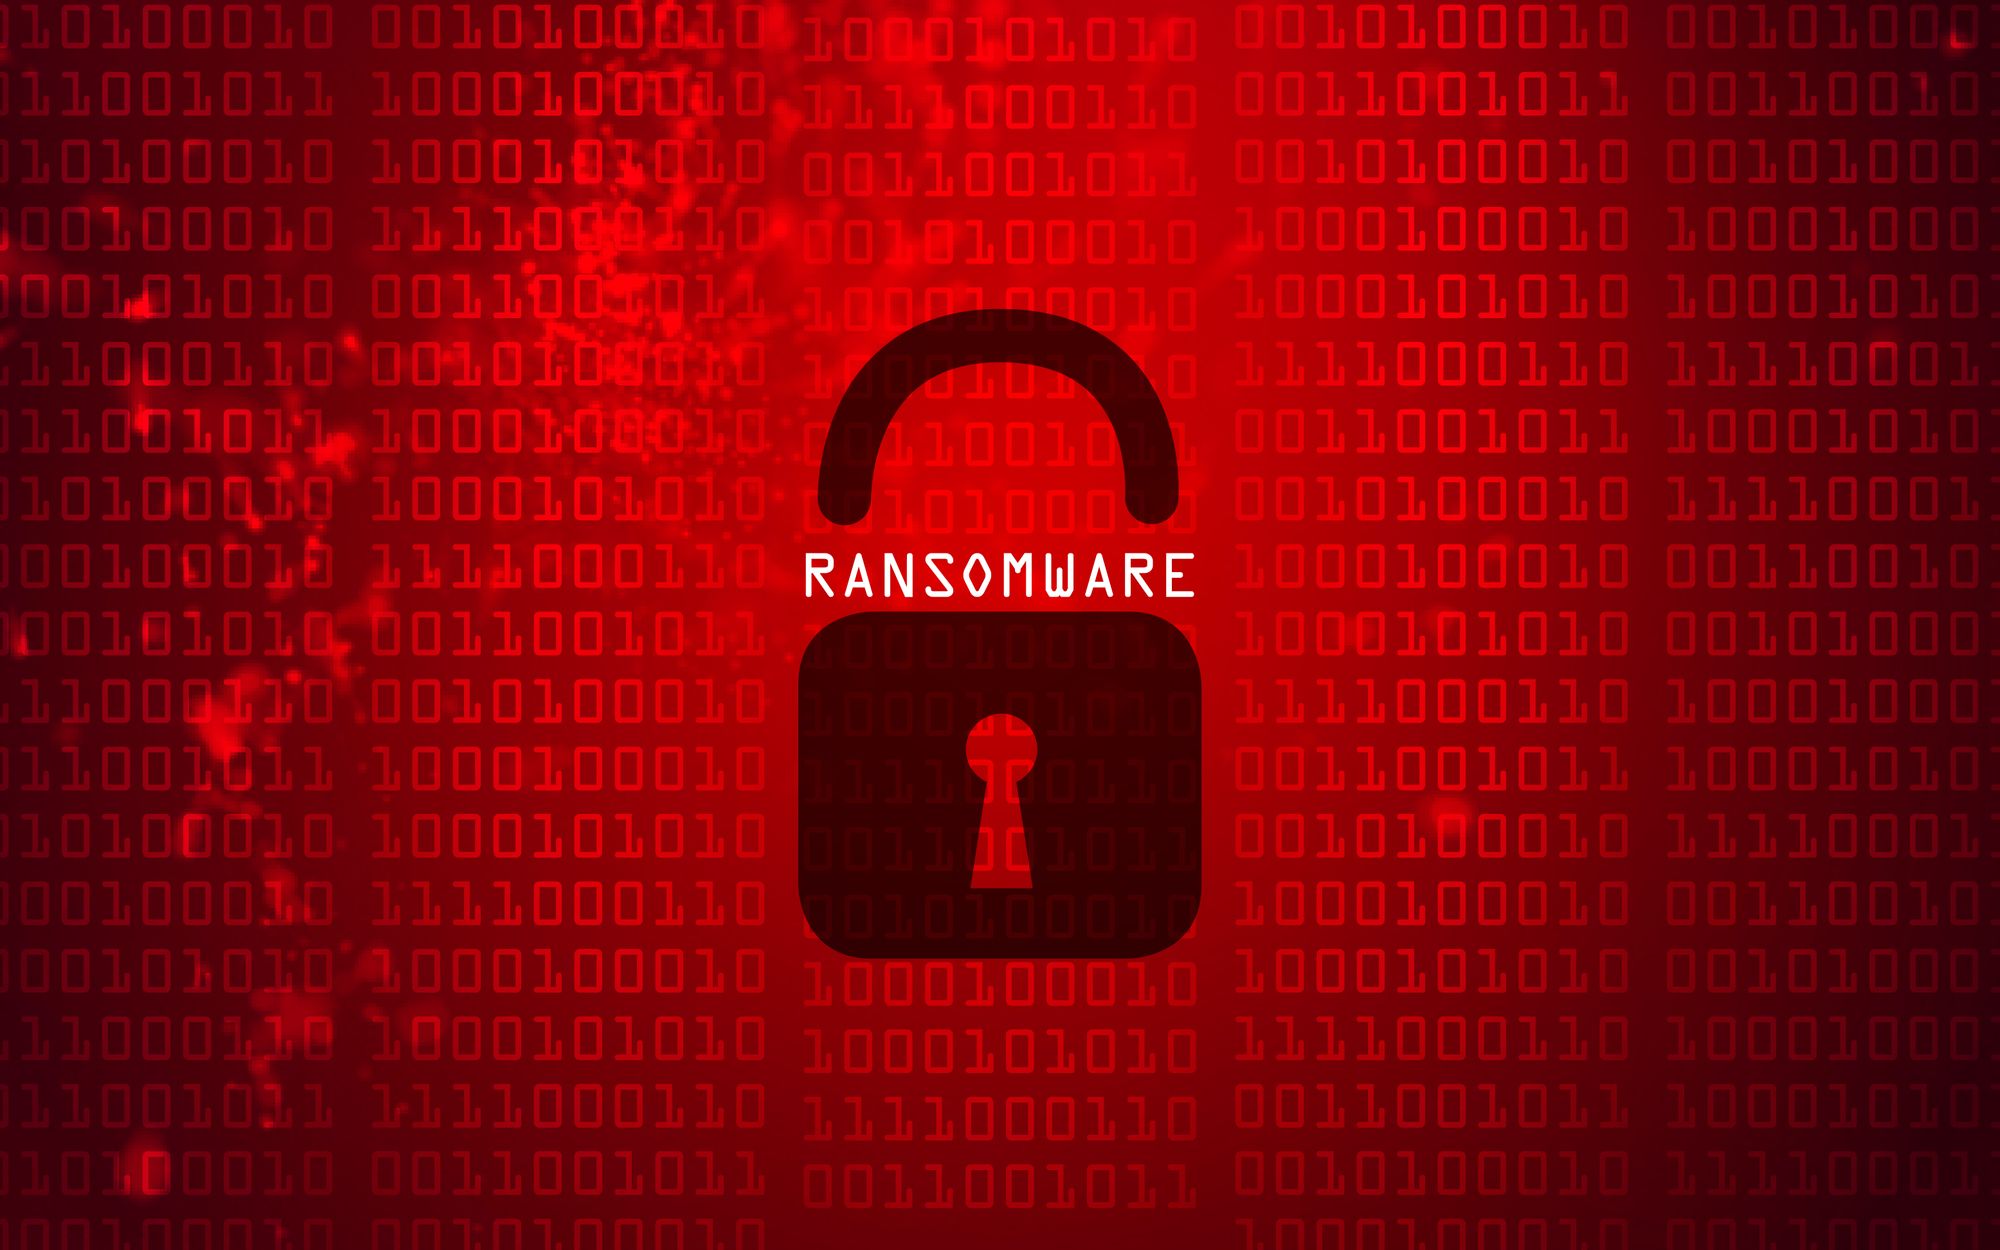 Ransomware-as-a-Service Cheat Sheet